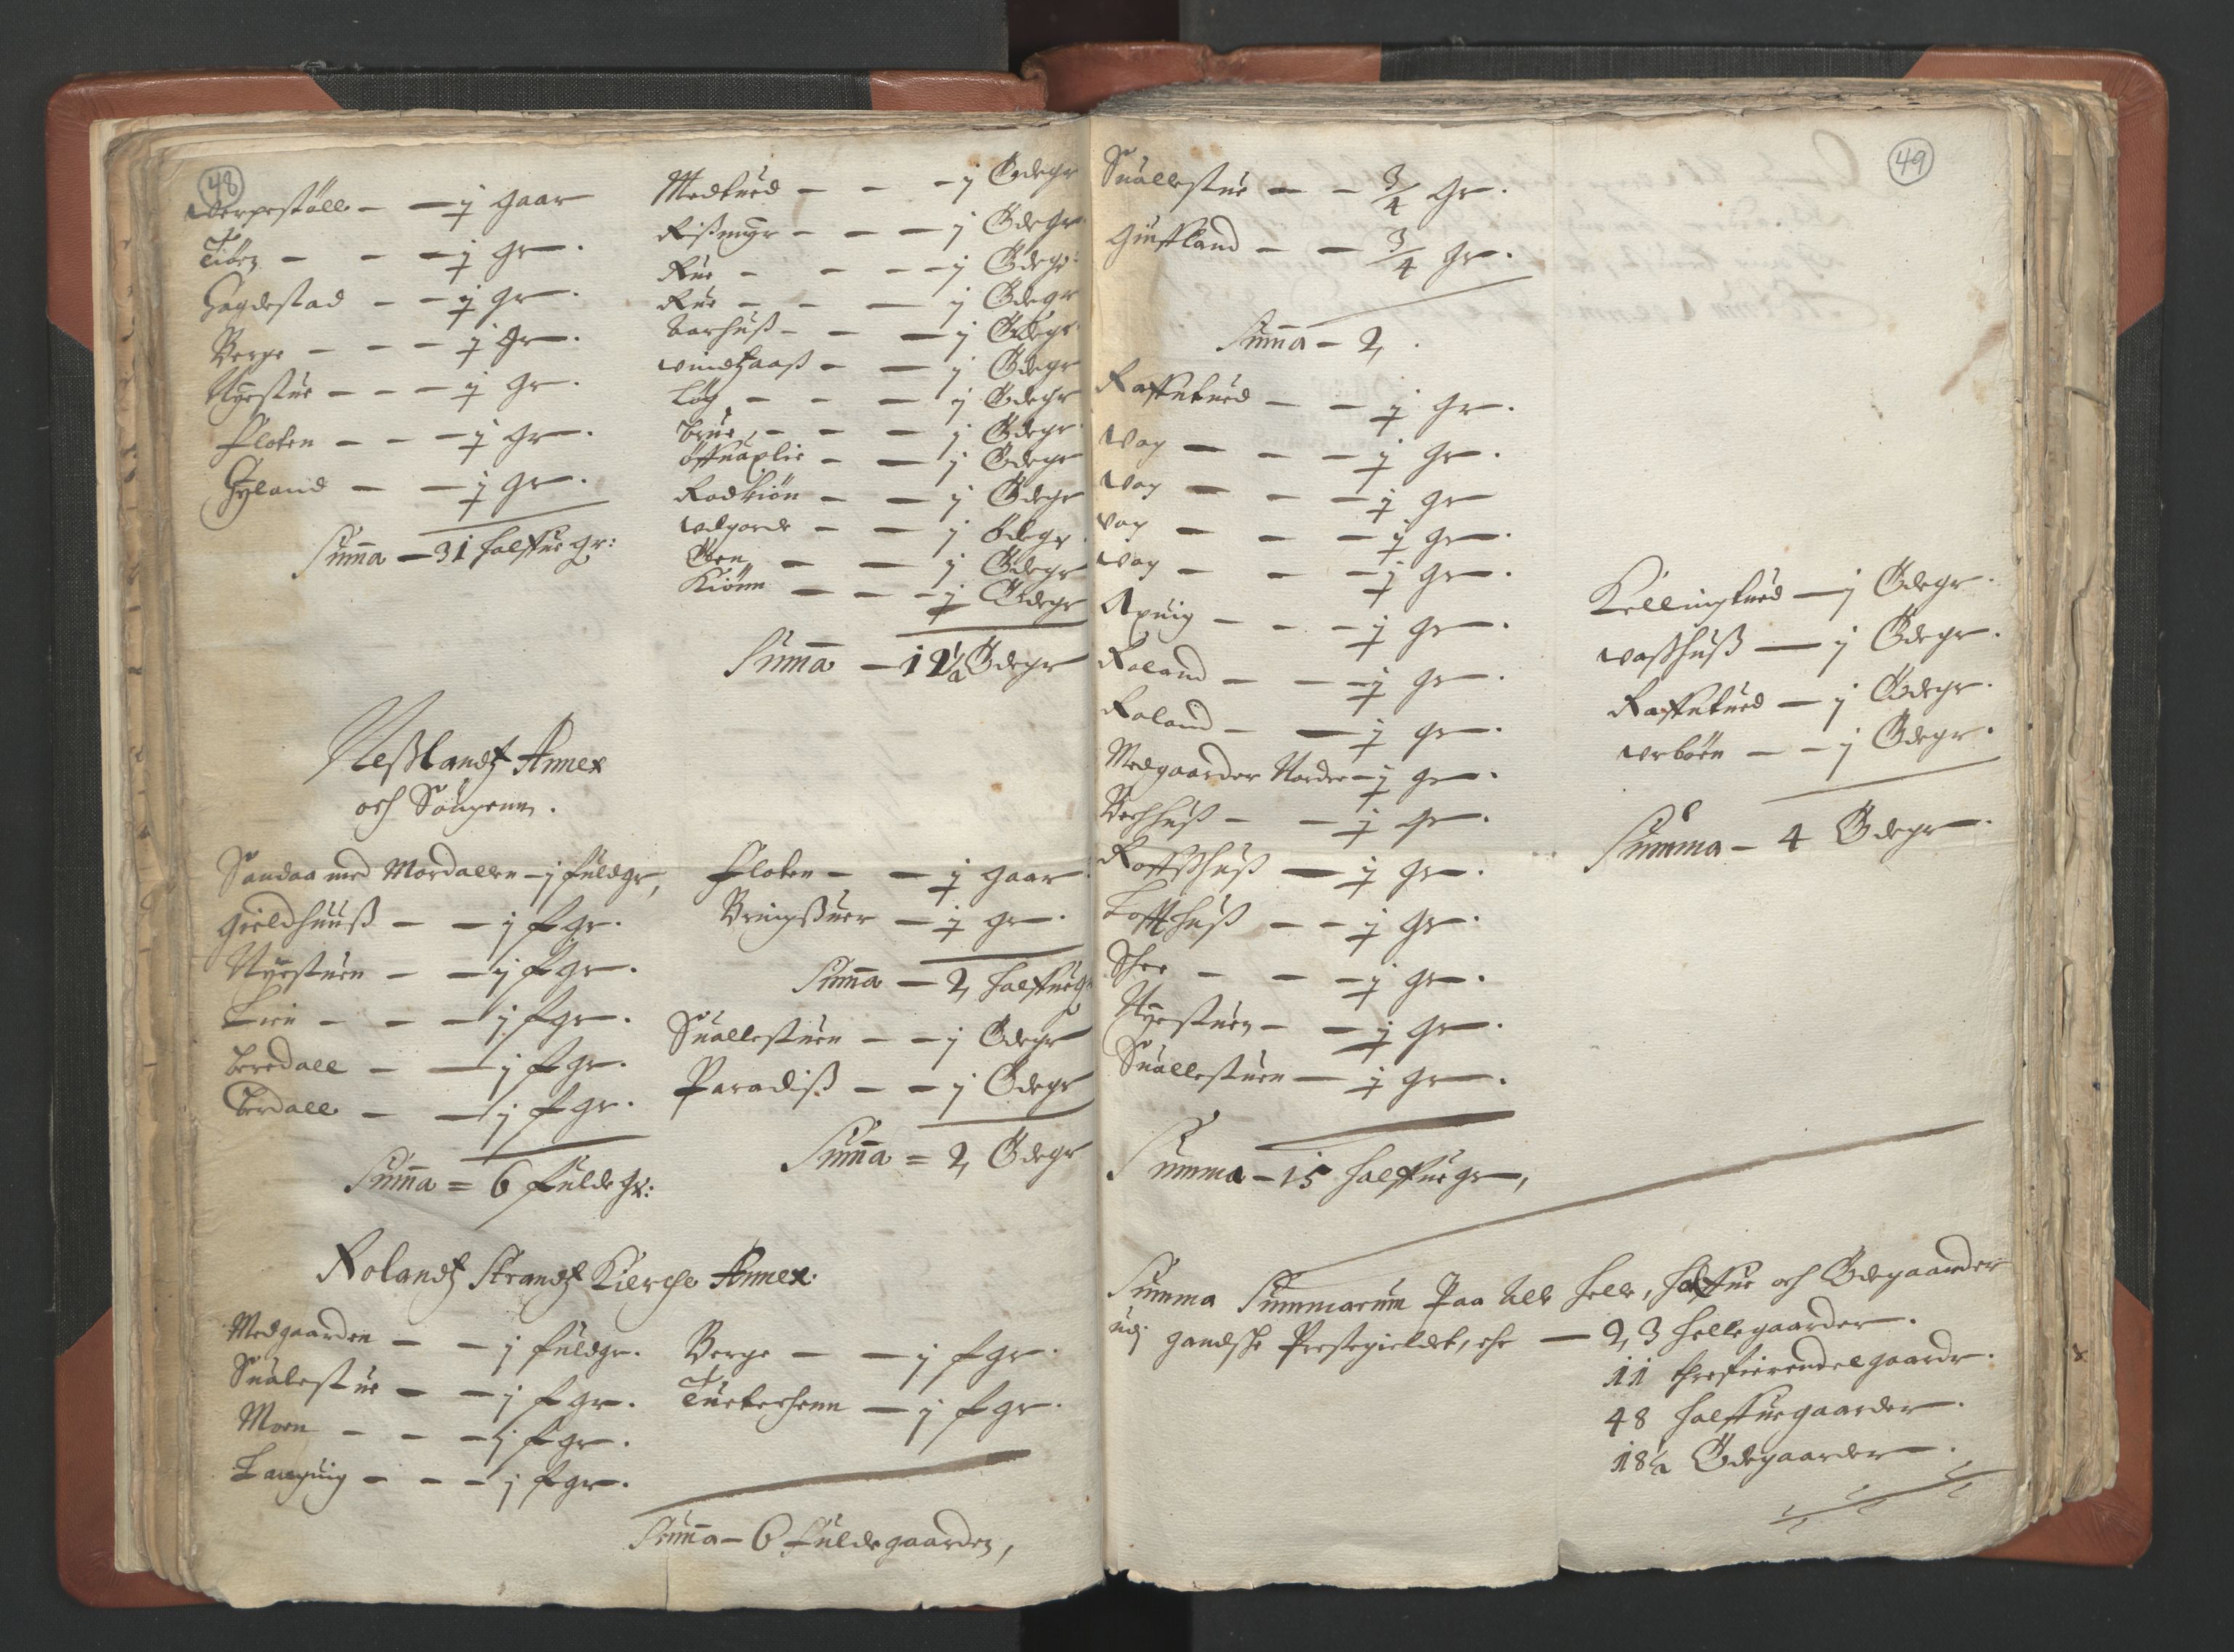 RA, Vicar's Census 1664-1666, no. 12: Øvre Telemark deanery, Nedre Telemark deanery and Bamble deanery, 1664-1666, p. 48-49